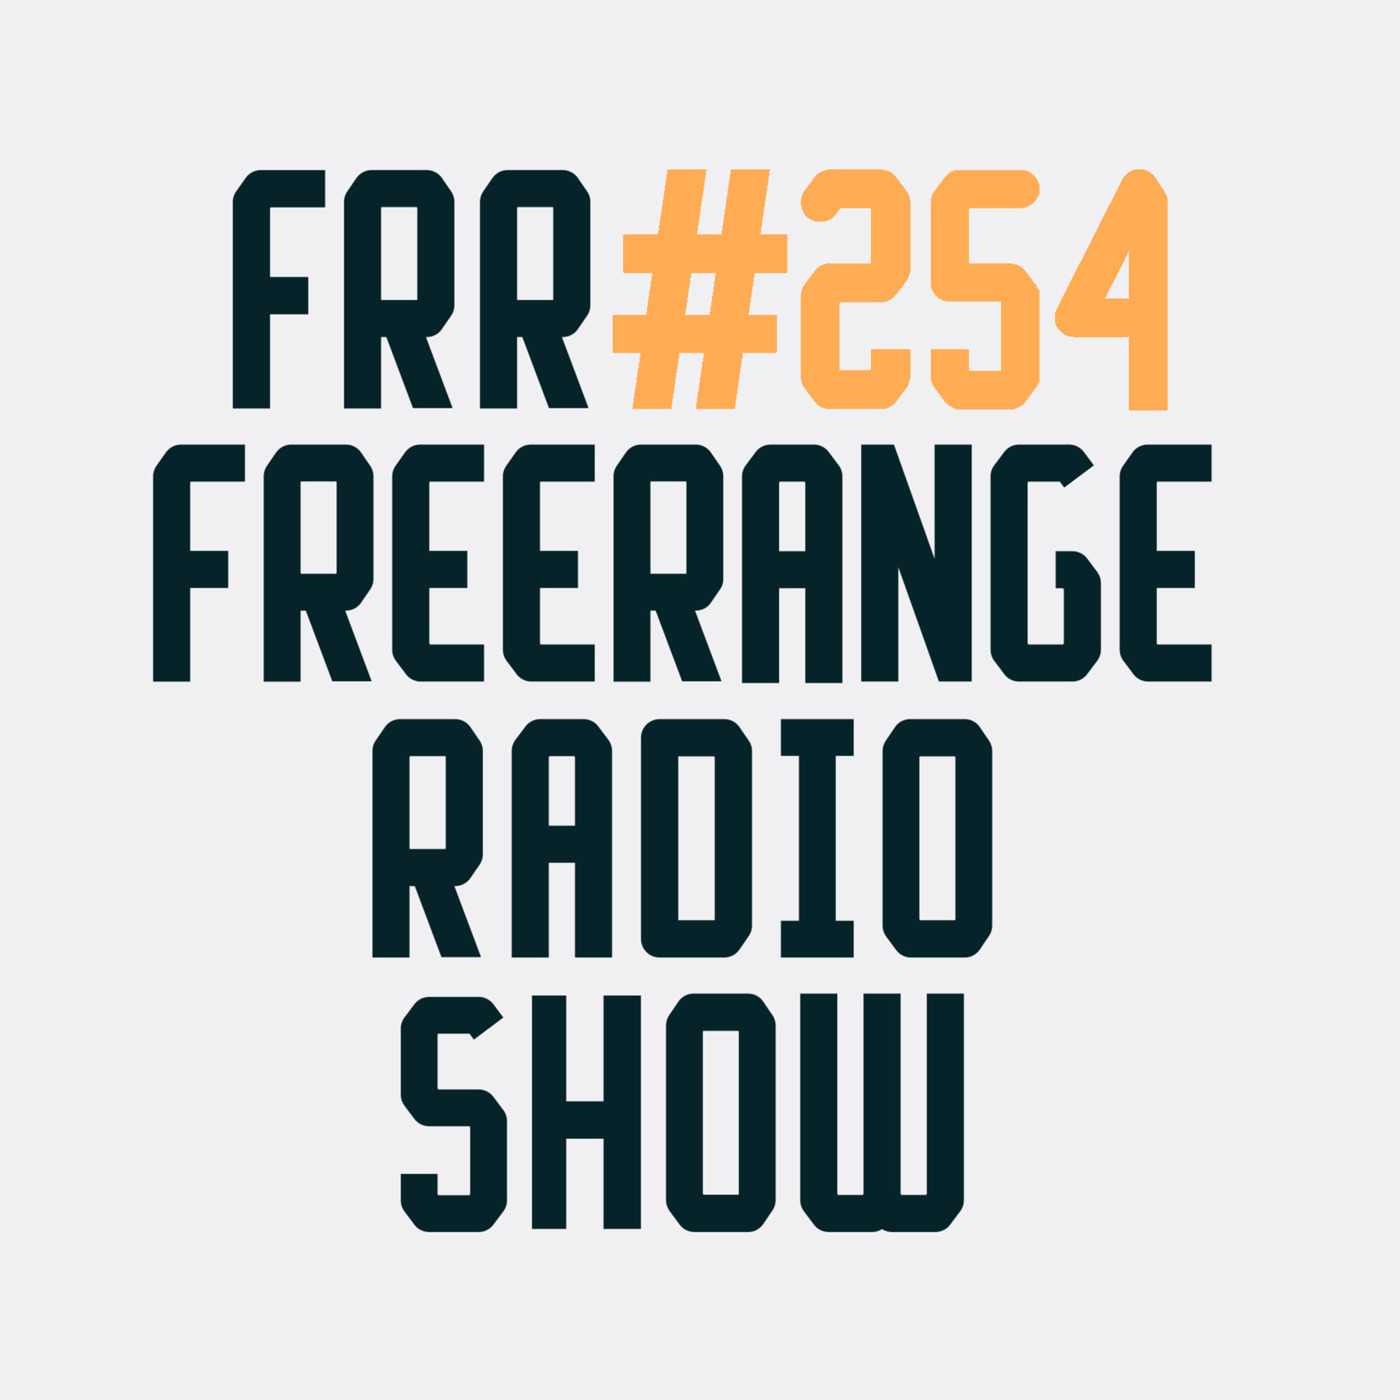 Episode 254: Freerange Records Radioshow No.254 - November 2022 With Matt Masters